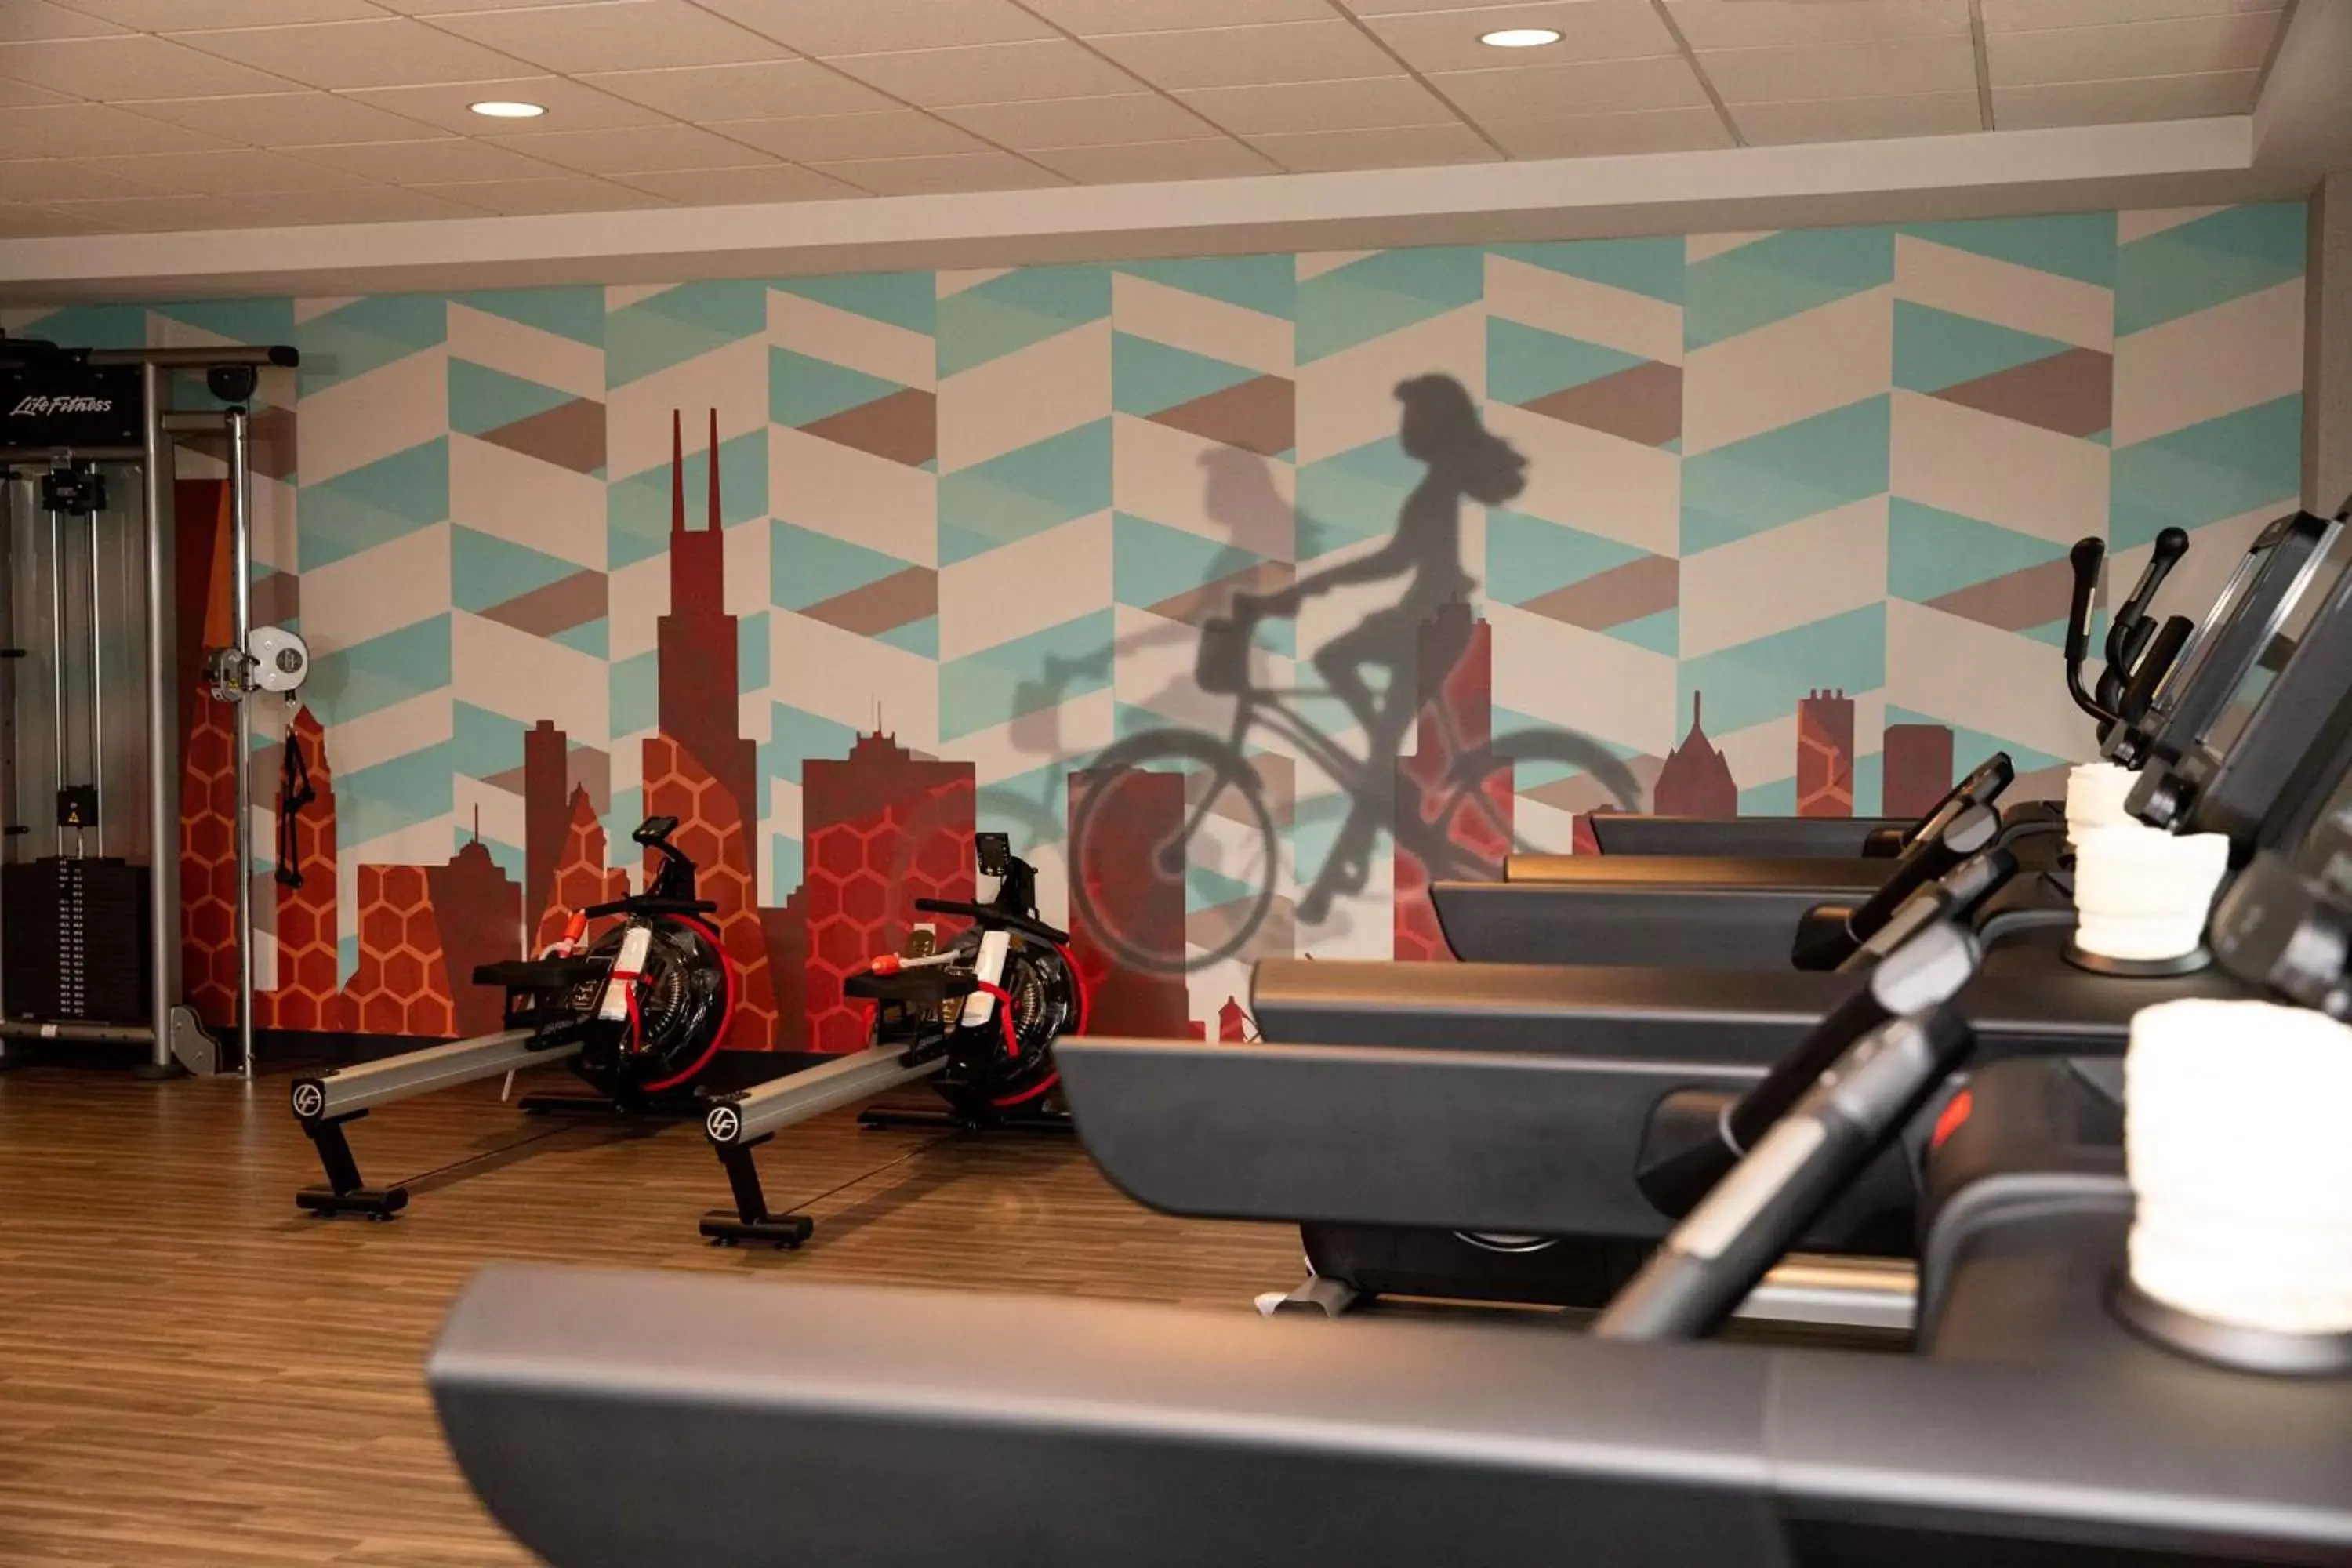 Fitness centre/facilities, Fitness Center/Facilities in Hyatt Place Chicago Wicker Park